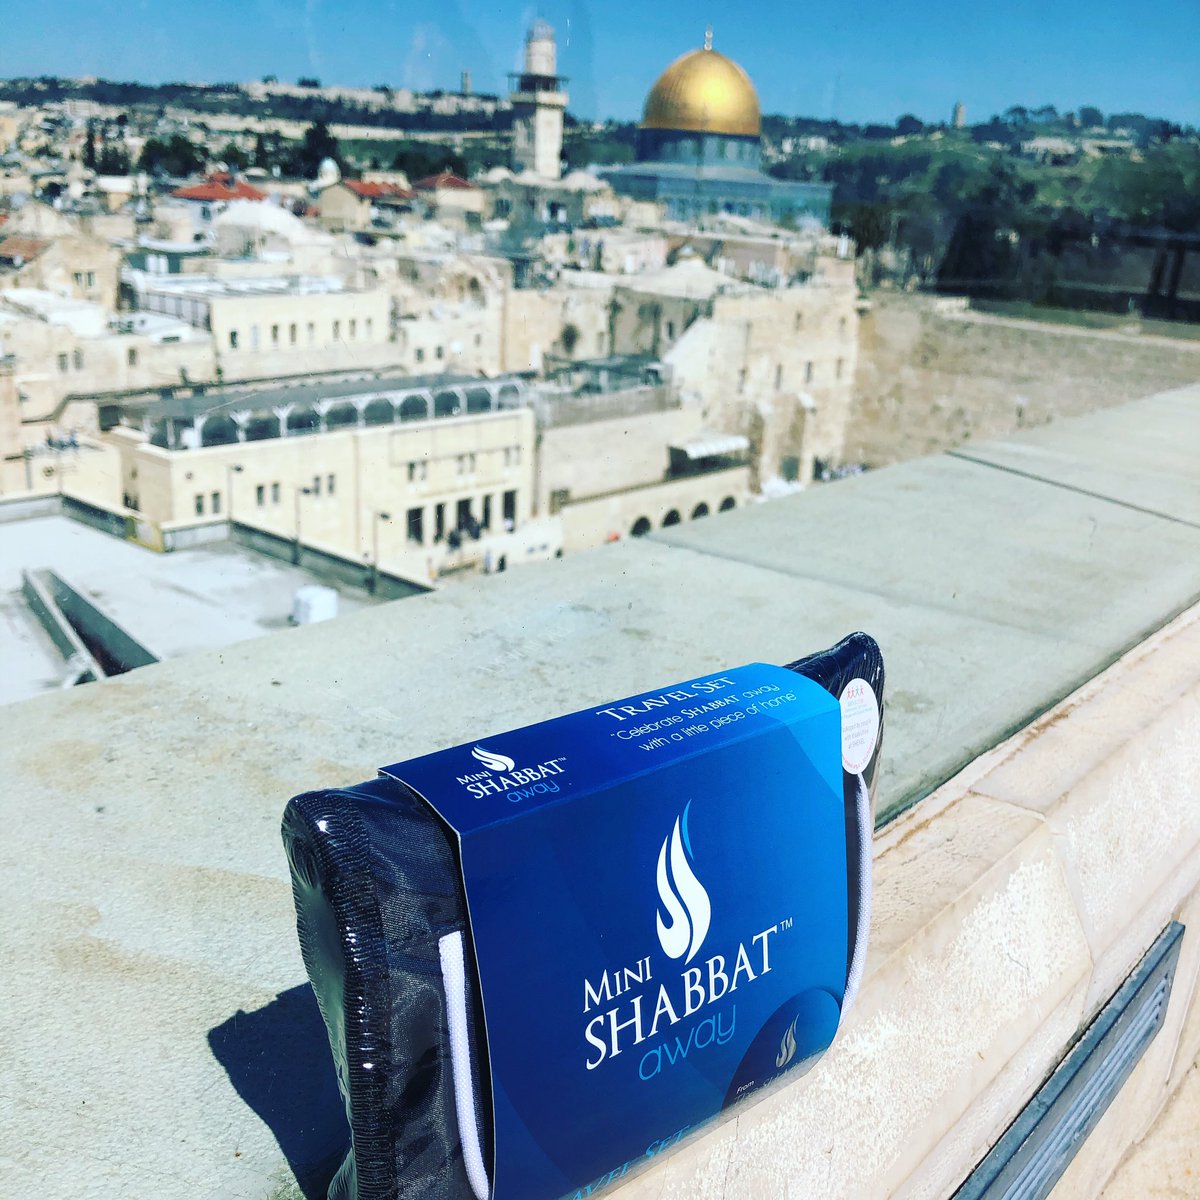 Shabbat Shalom to all and Happy Jerusalem Day 🙏 #ShabbatwithAGJC @gulfjewish @rd_rubin @CristianaCamiso